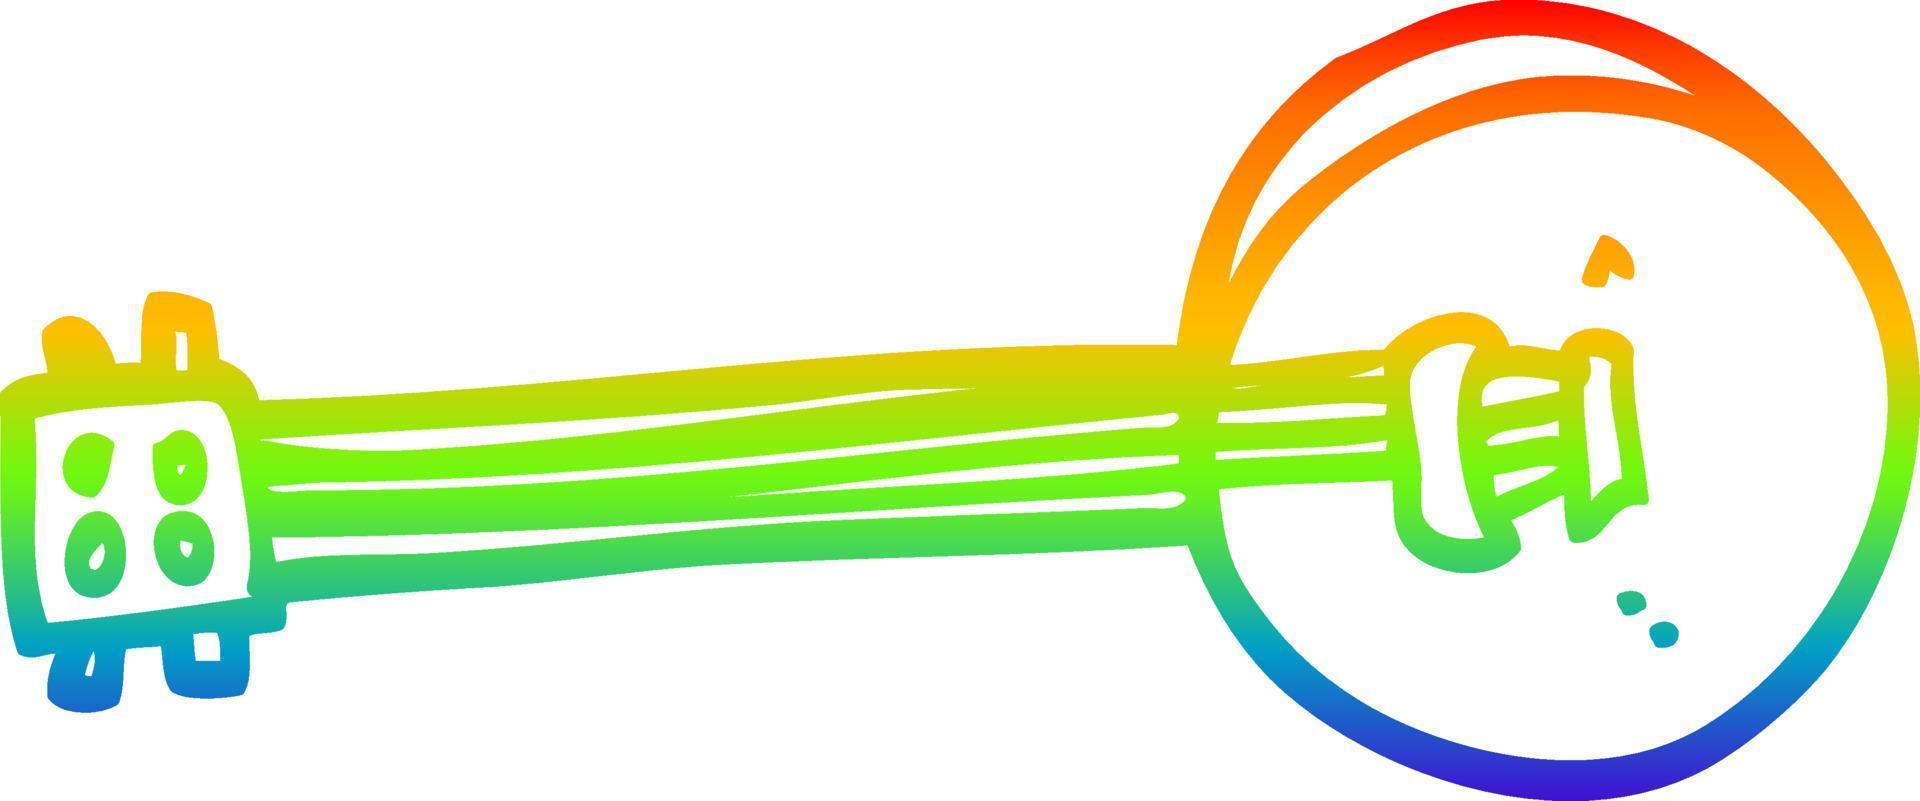 rainbow gradient line drawing cartoon banjo vector